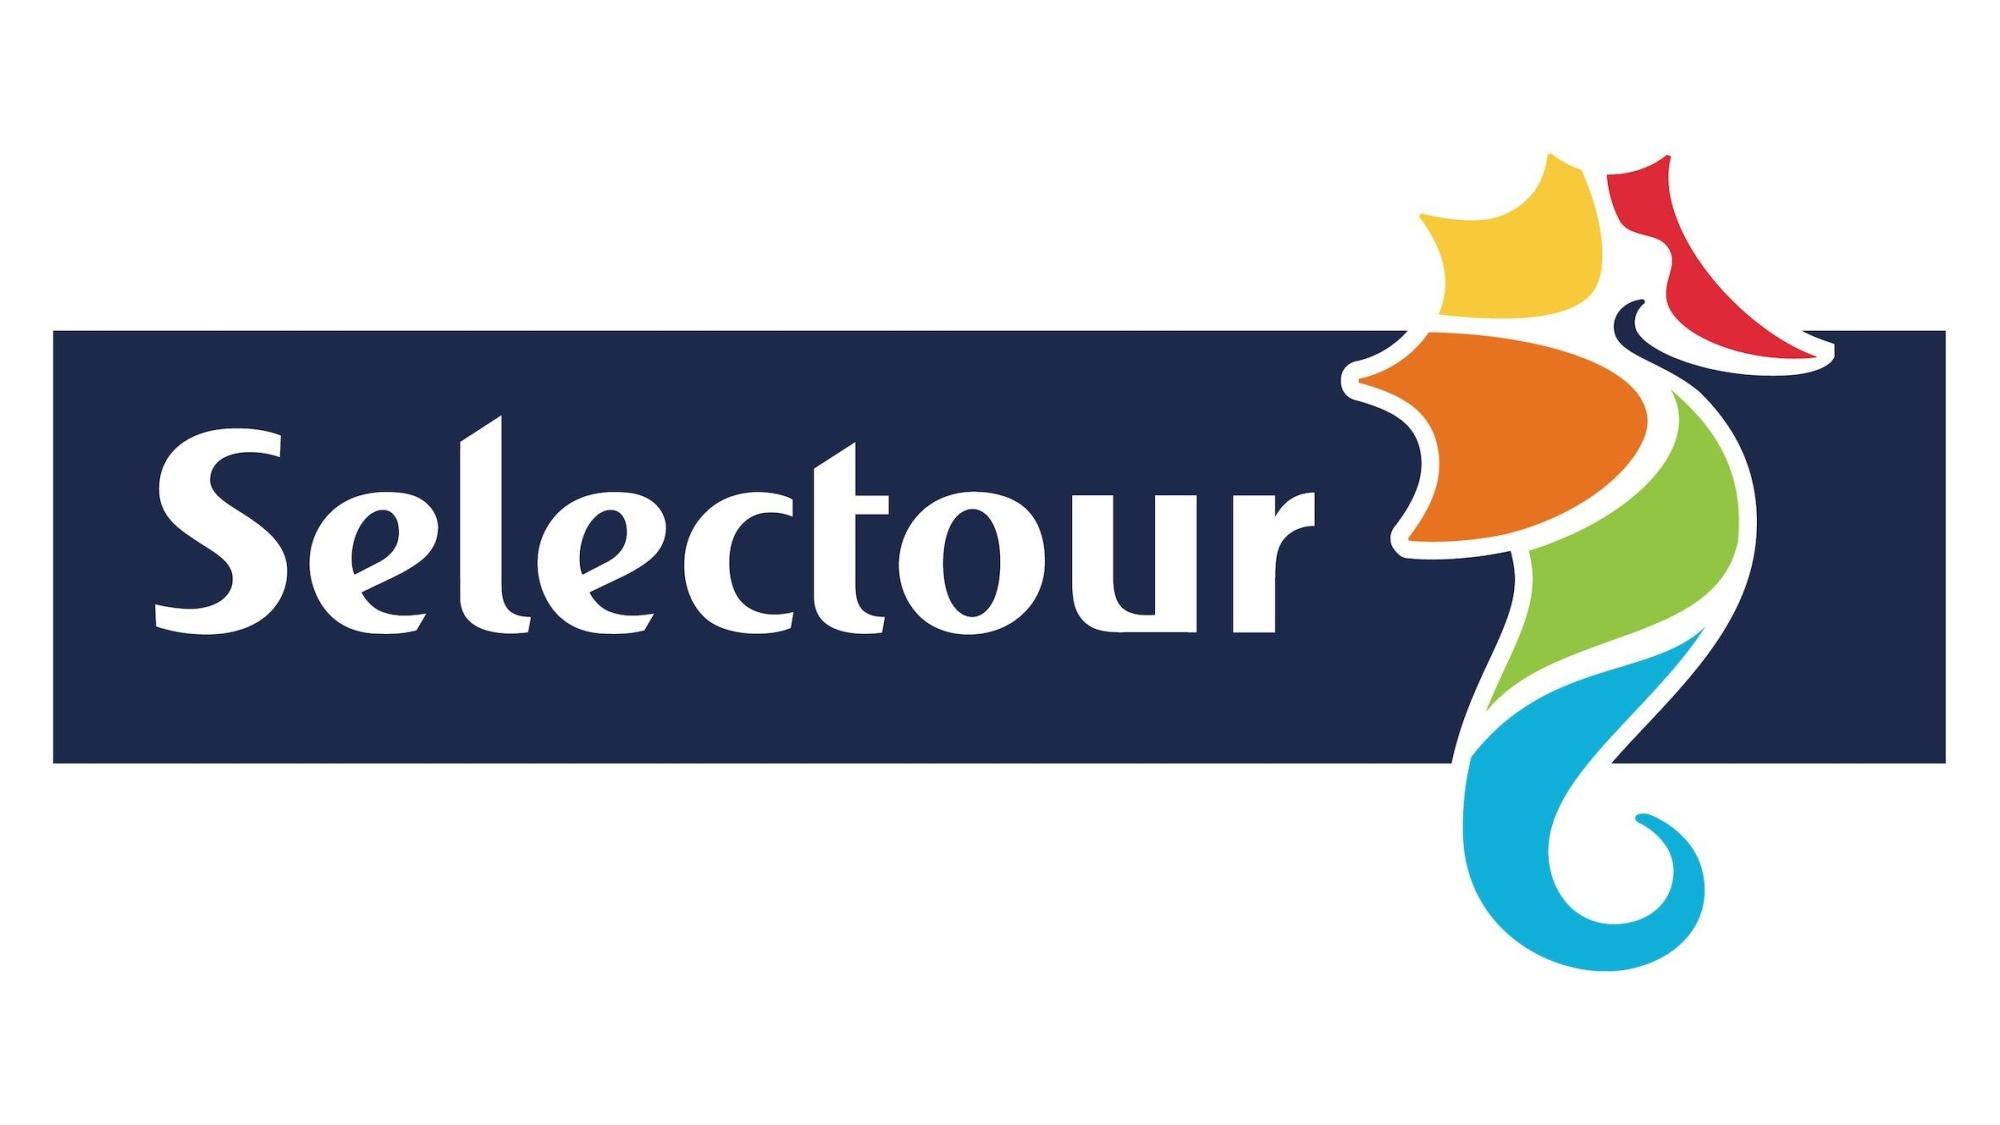 Selectour - Groupe Europatours Muttersholtz